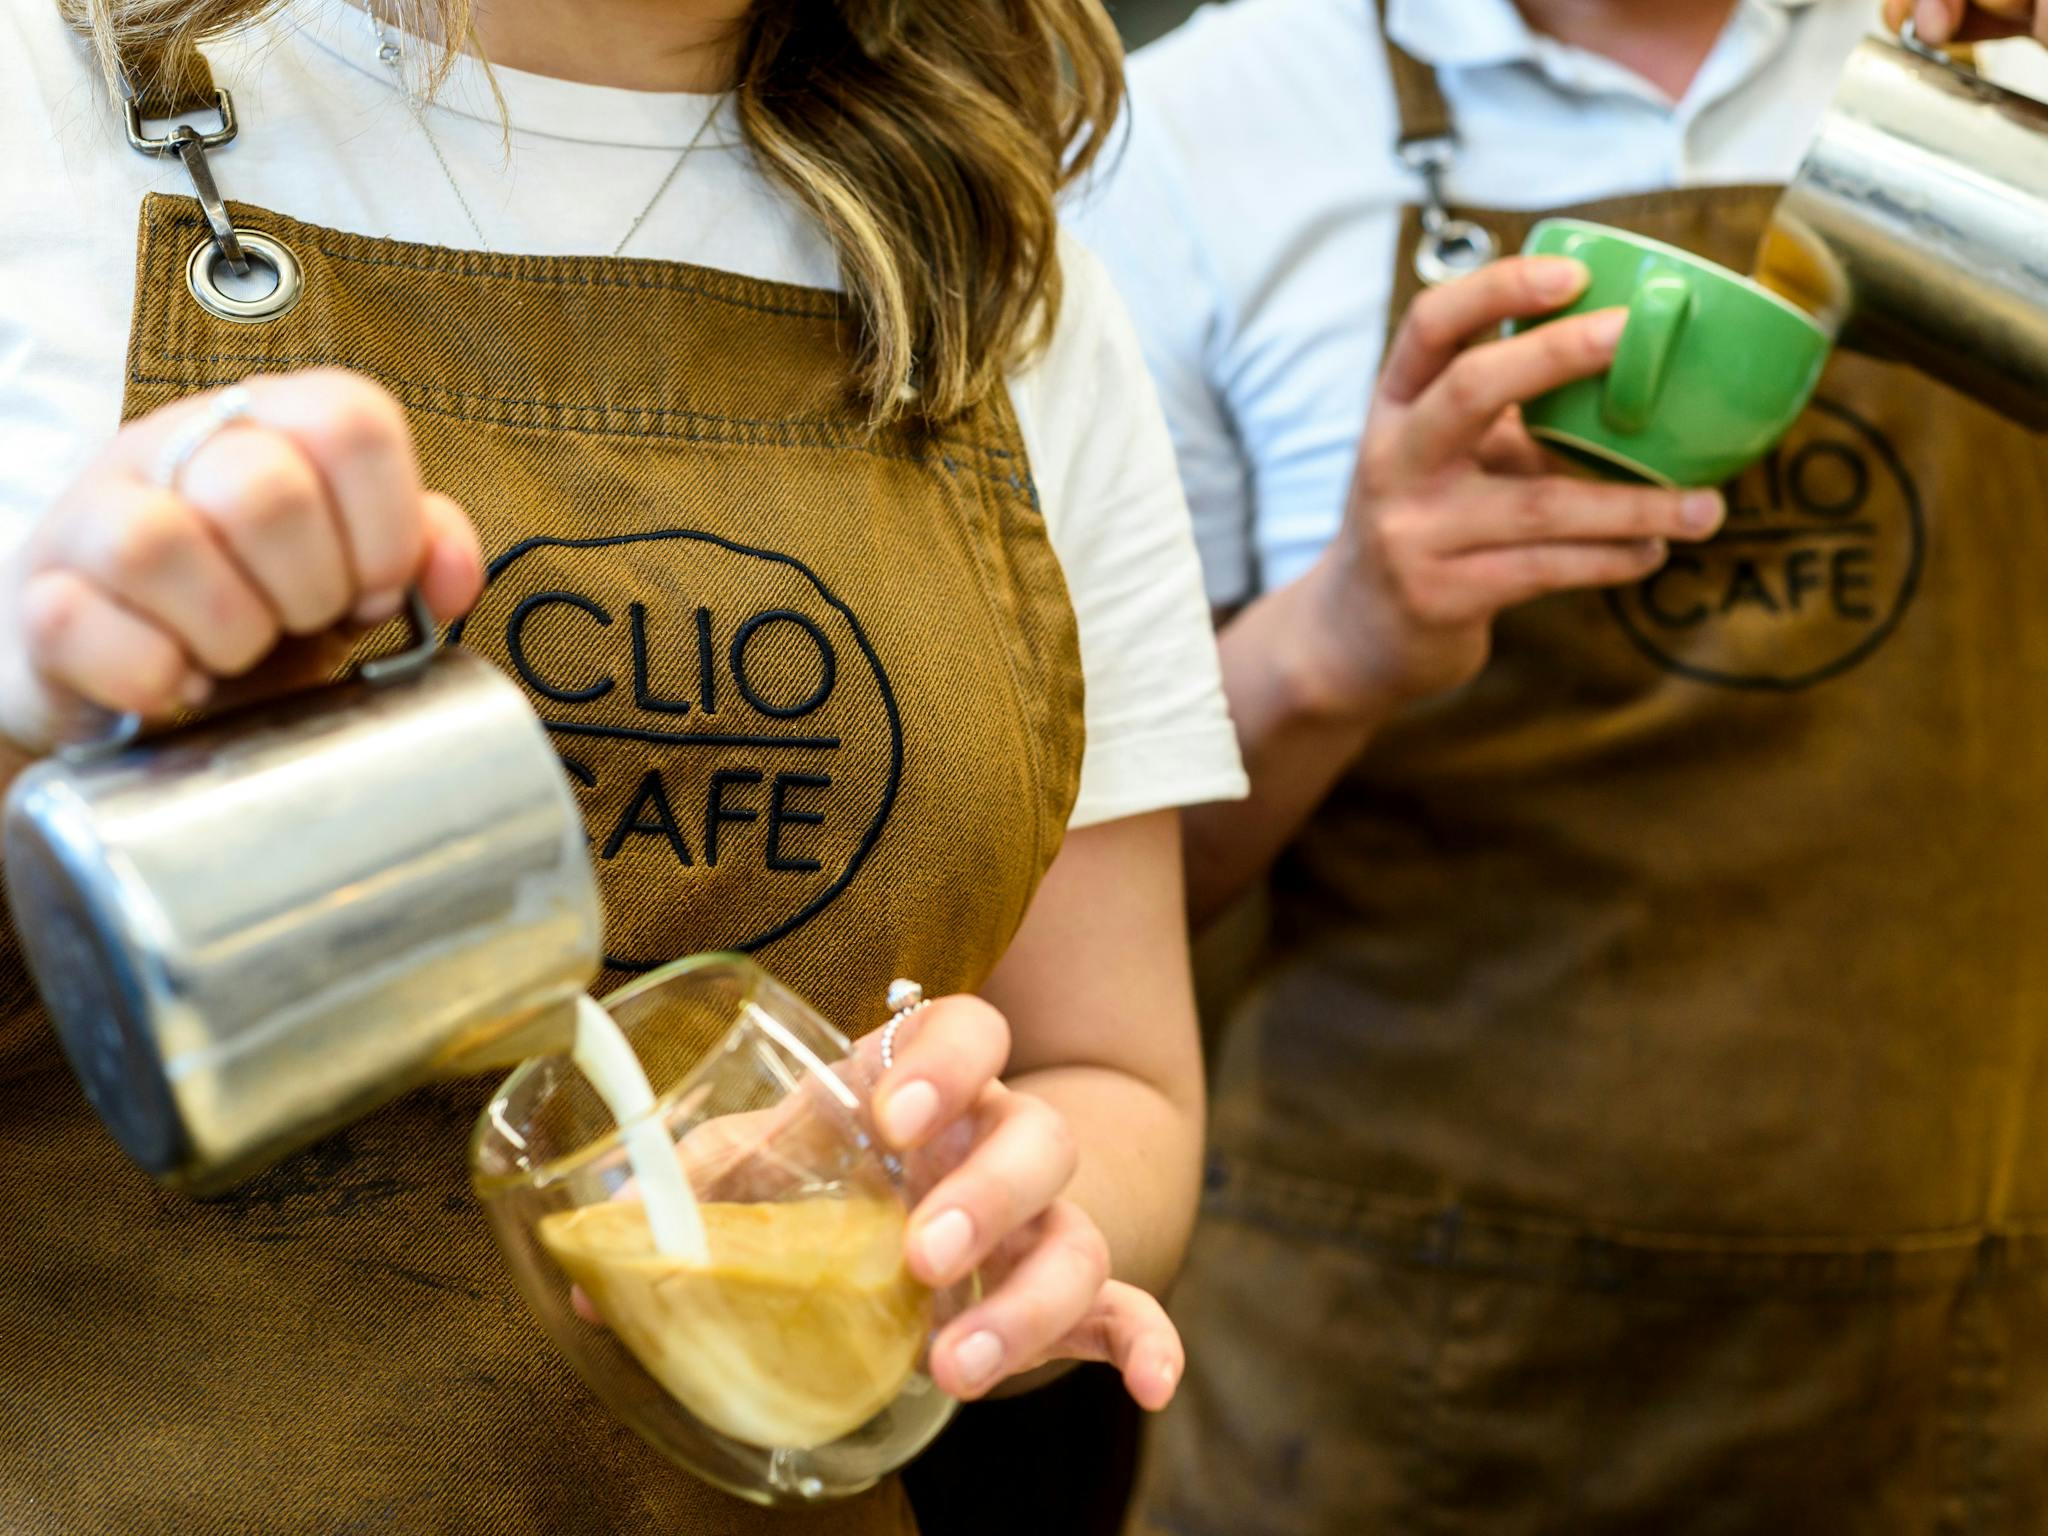 Clio Cafe Slider Image 6